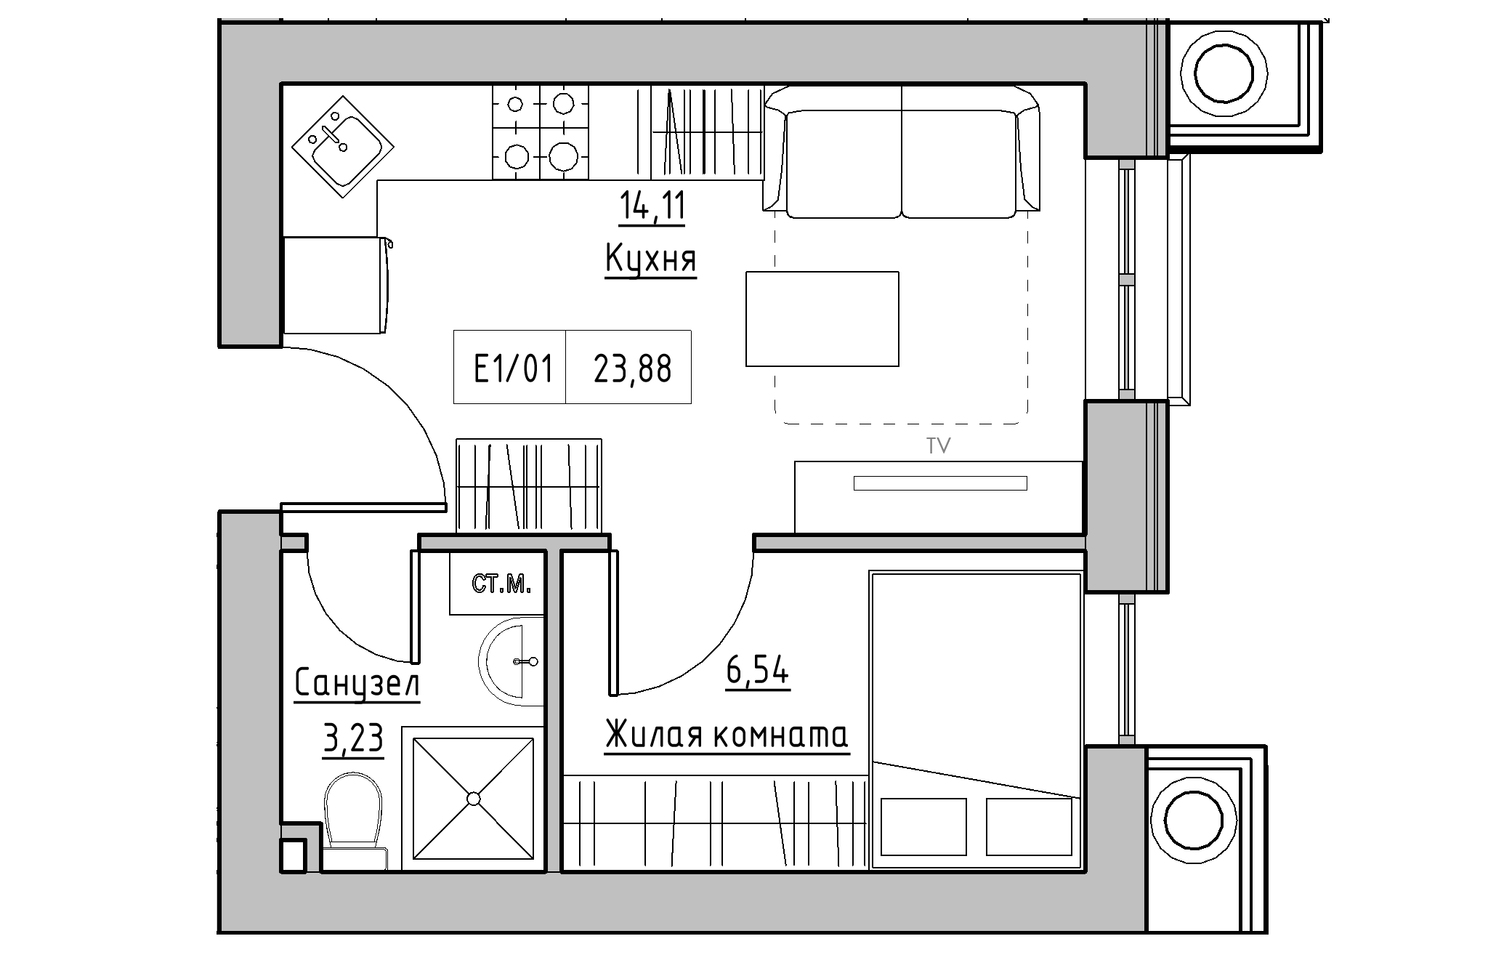 Planning 1-rm flats area 23.88m2, KS-010-02/0011.